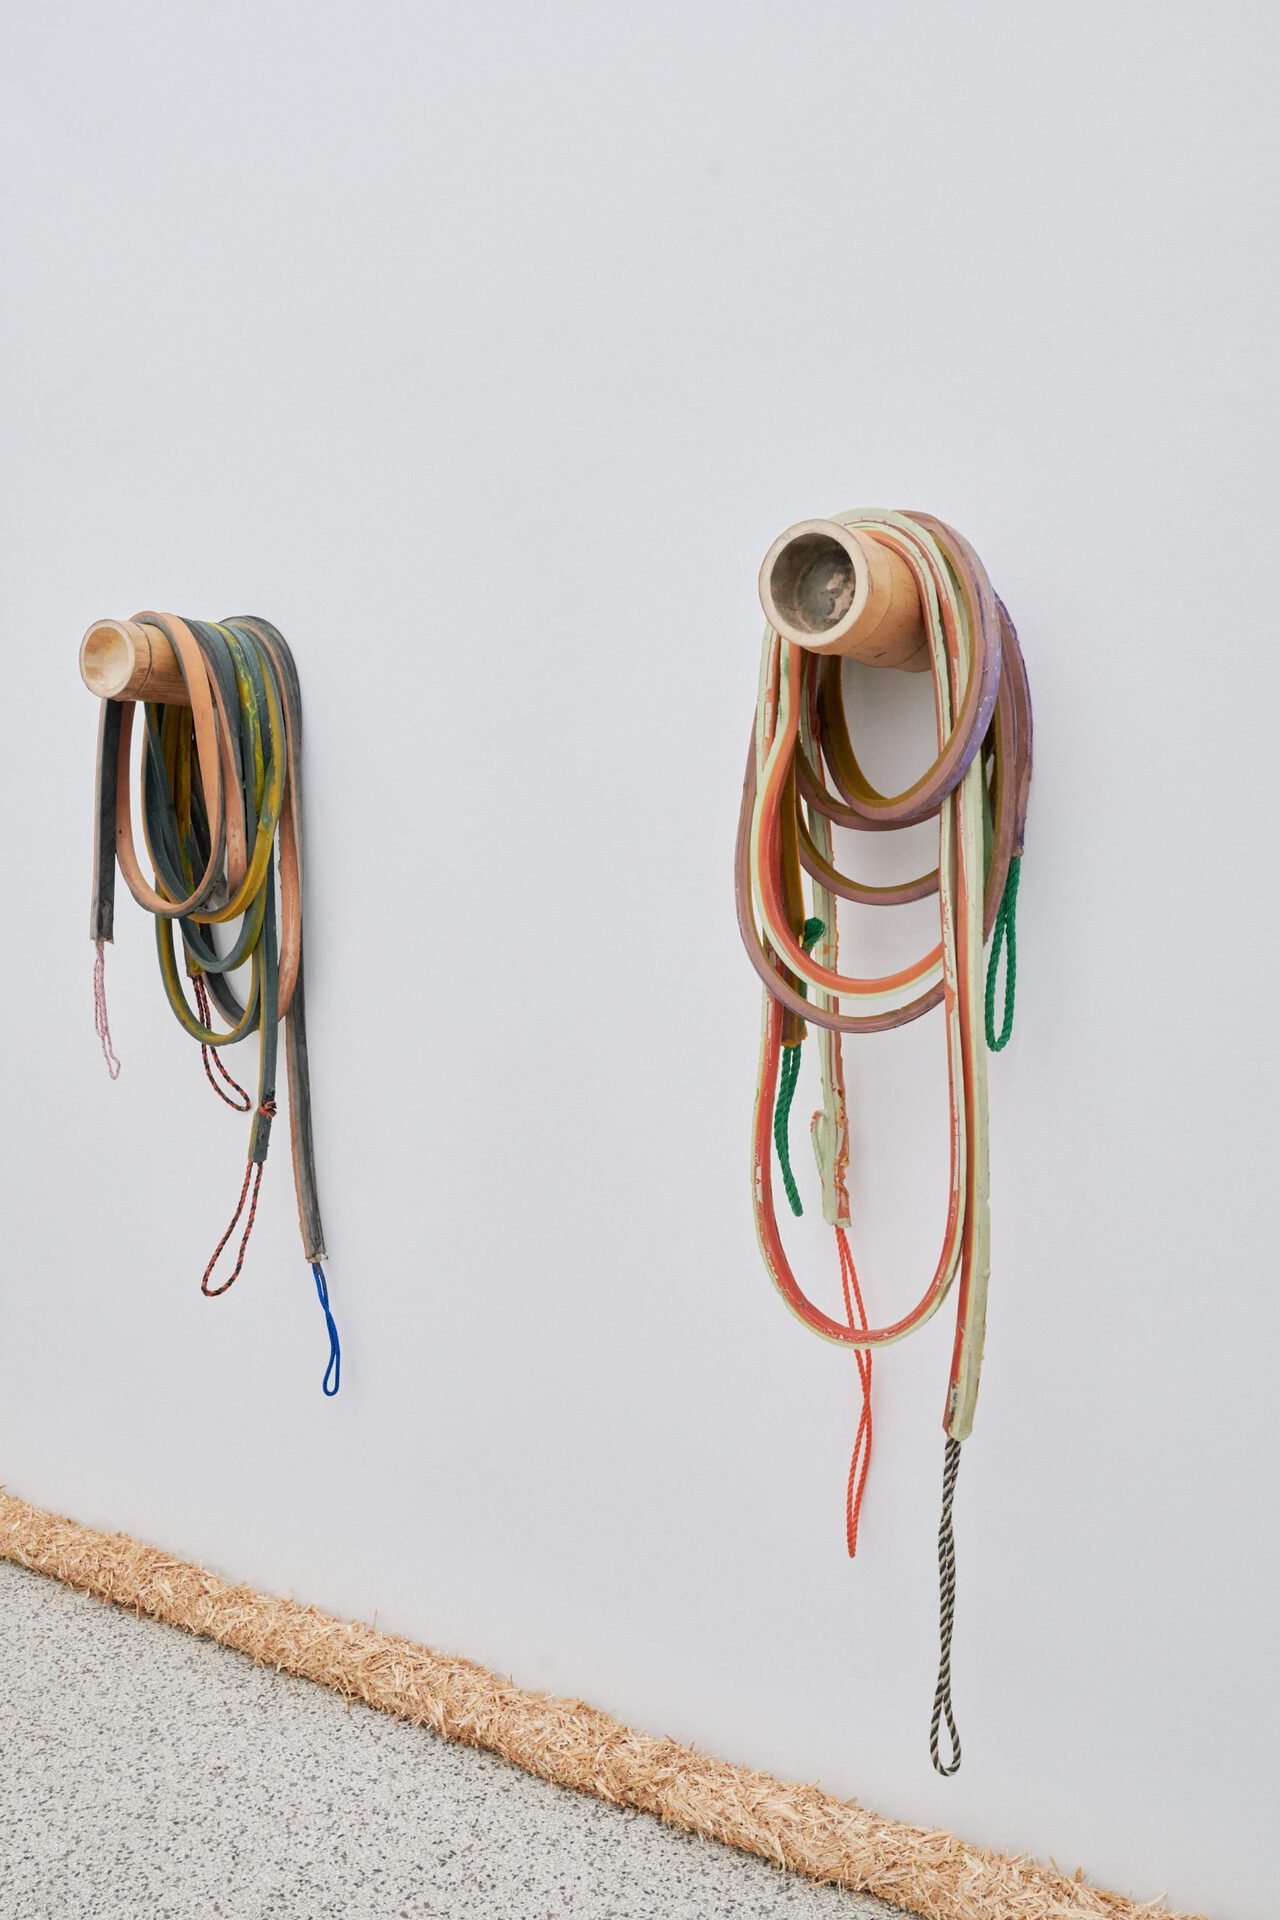 Liesl Raff, loop 1, 2 Installation shot, 2021, Latez, rope, bamboo